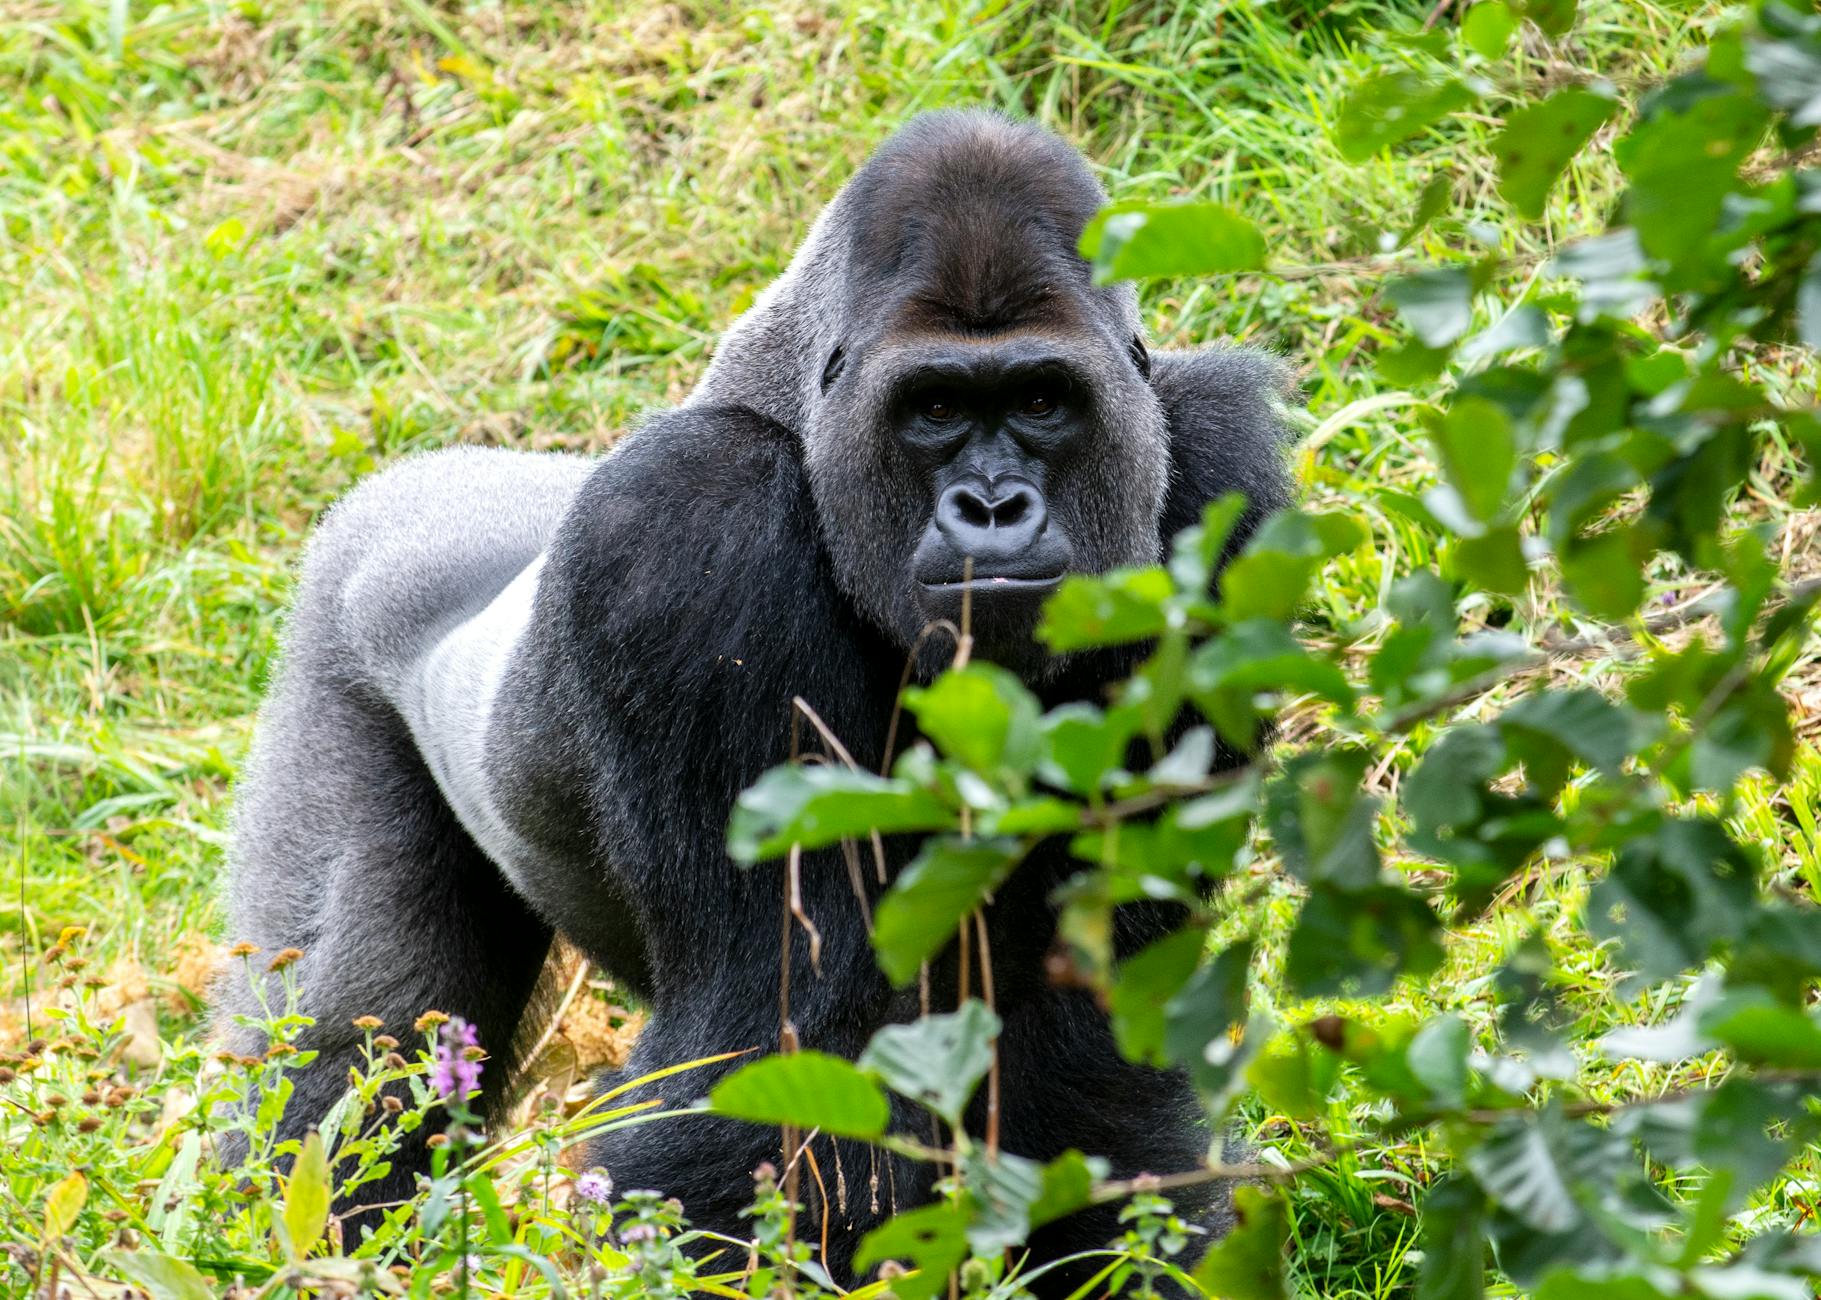 photo of a gorilla walking on grass